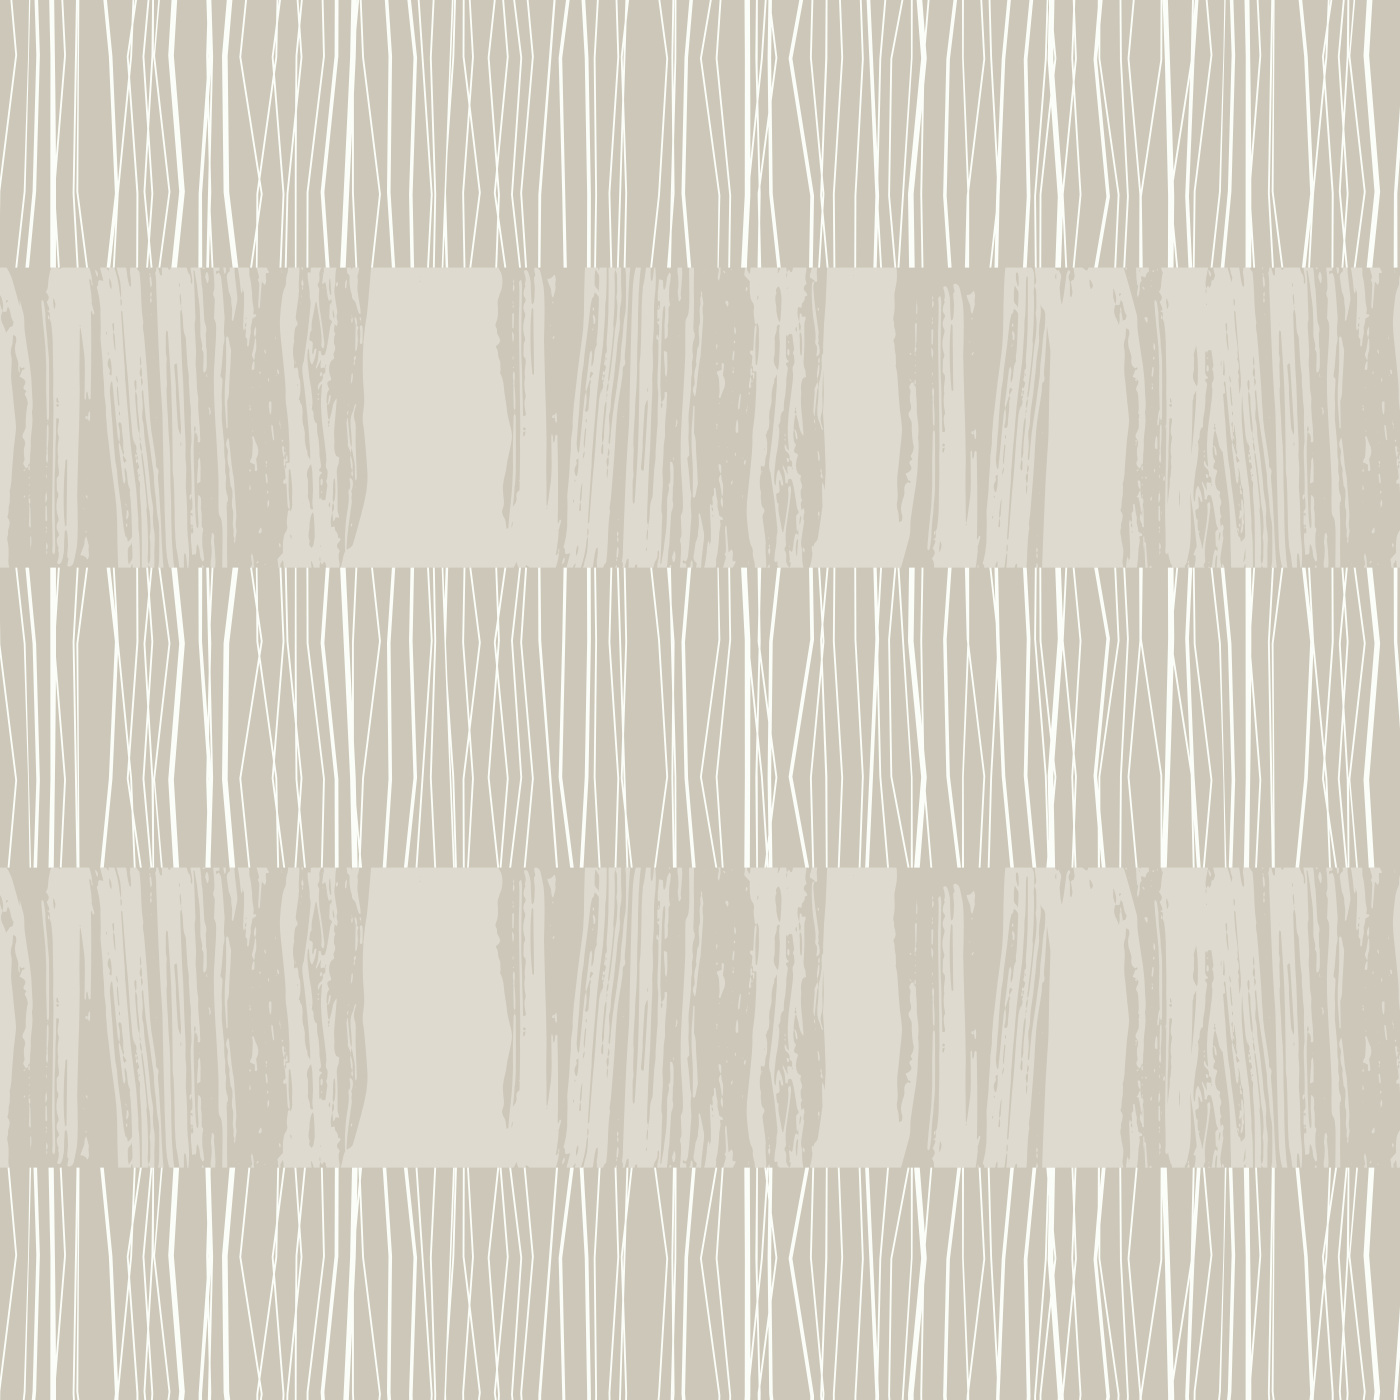 Distressed Weave Wallpaper